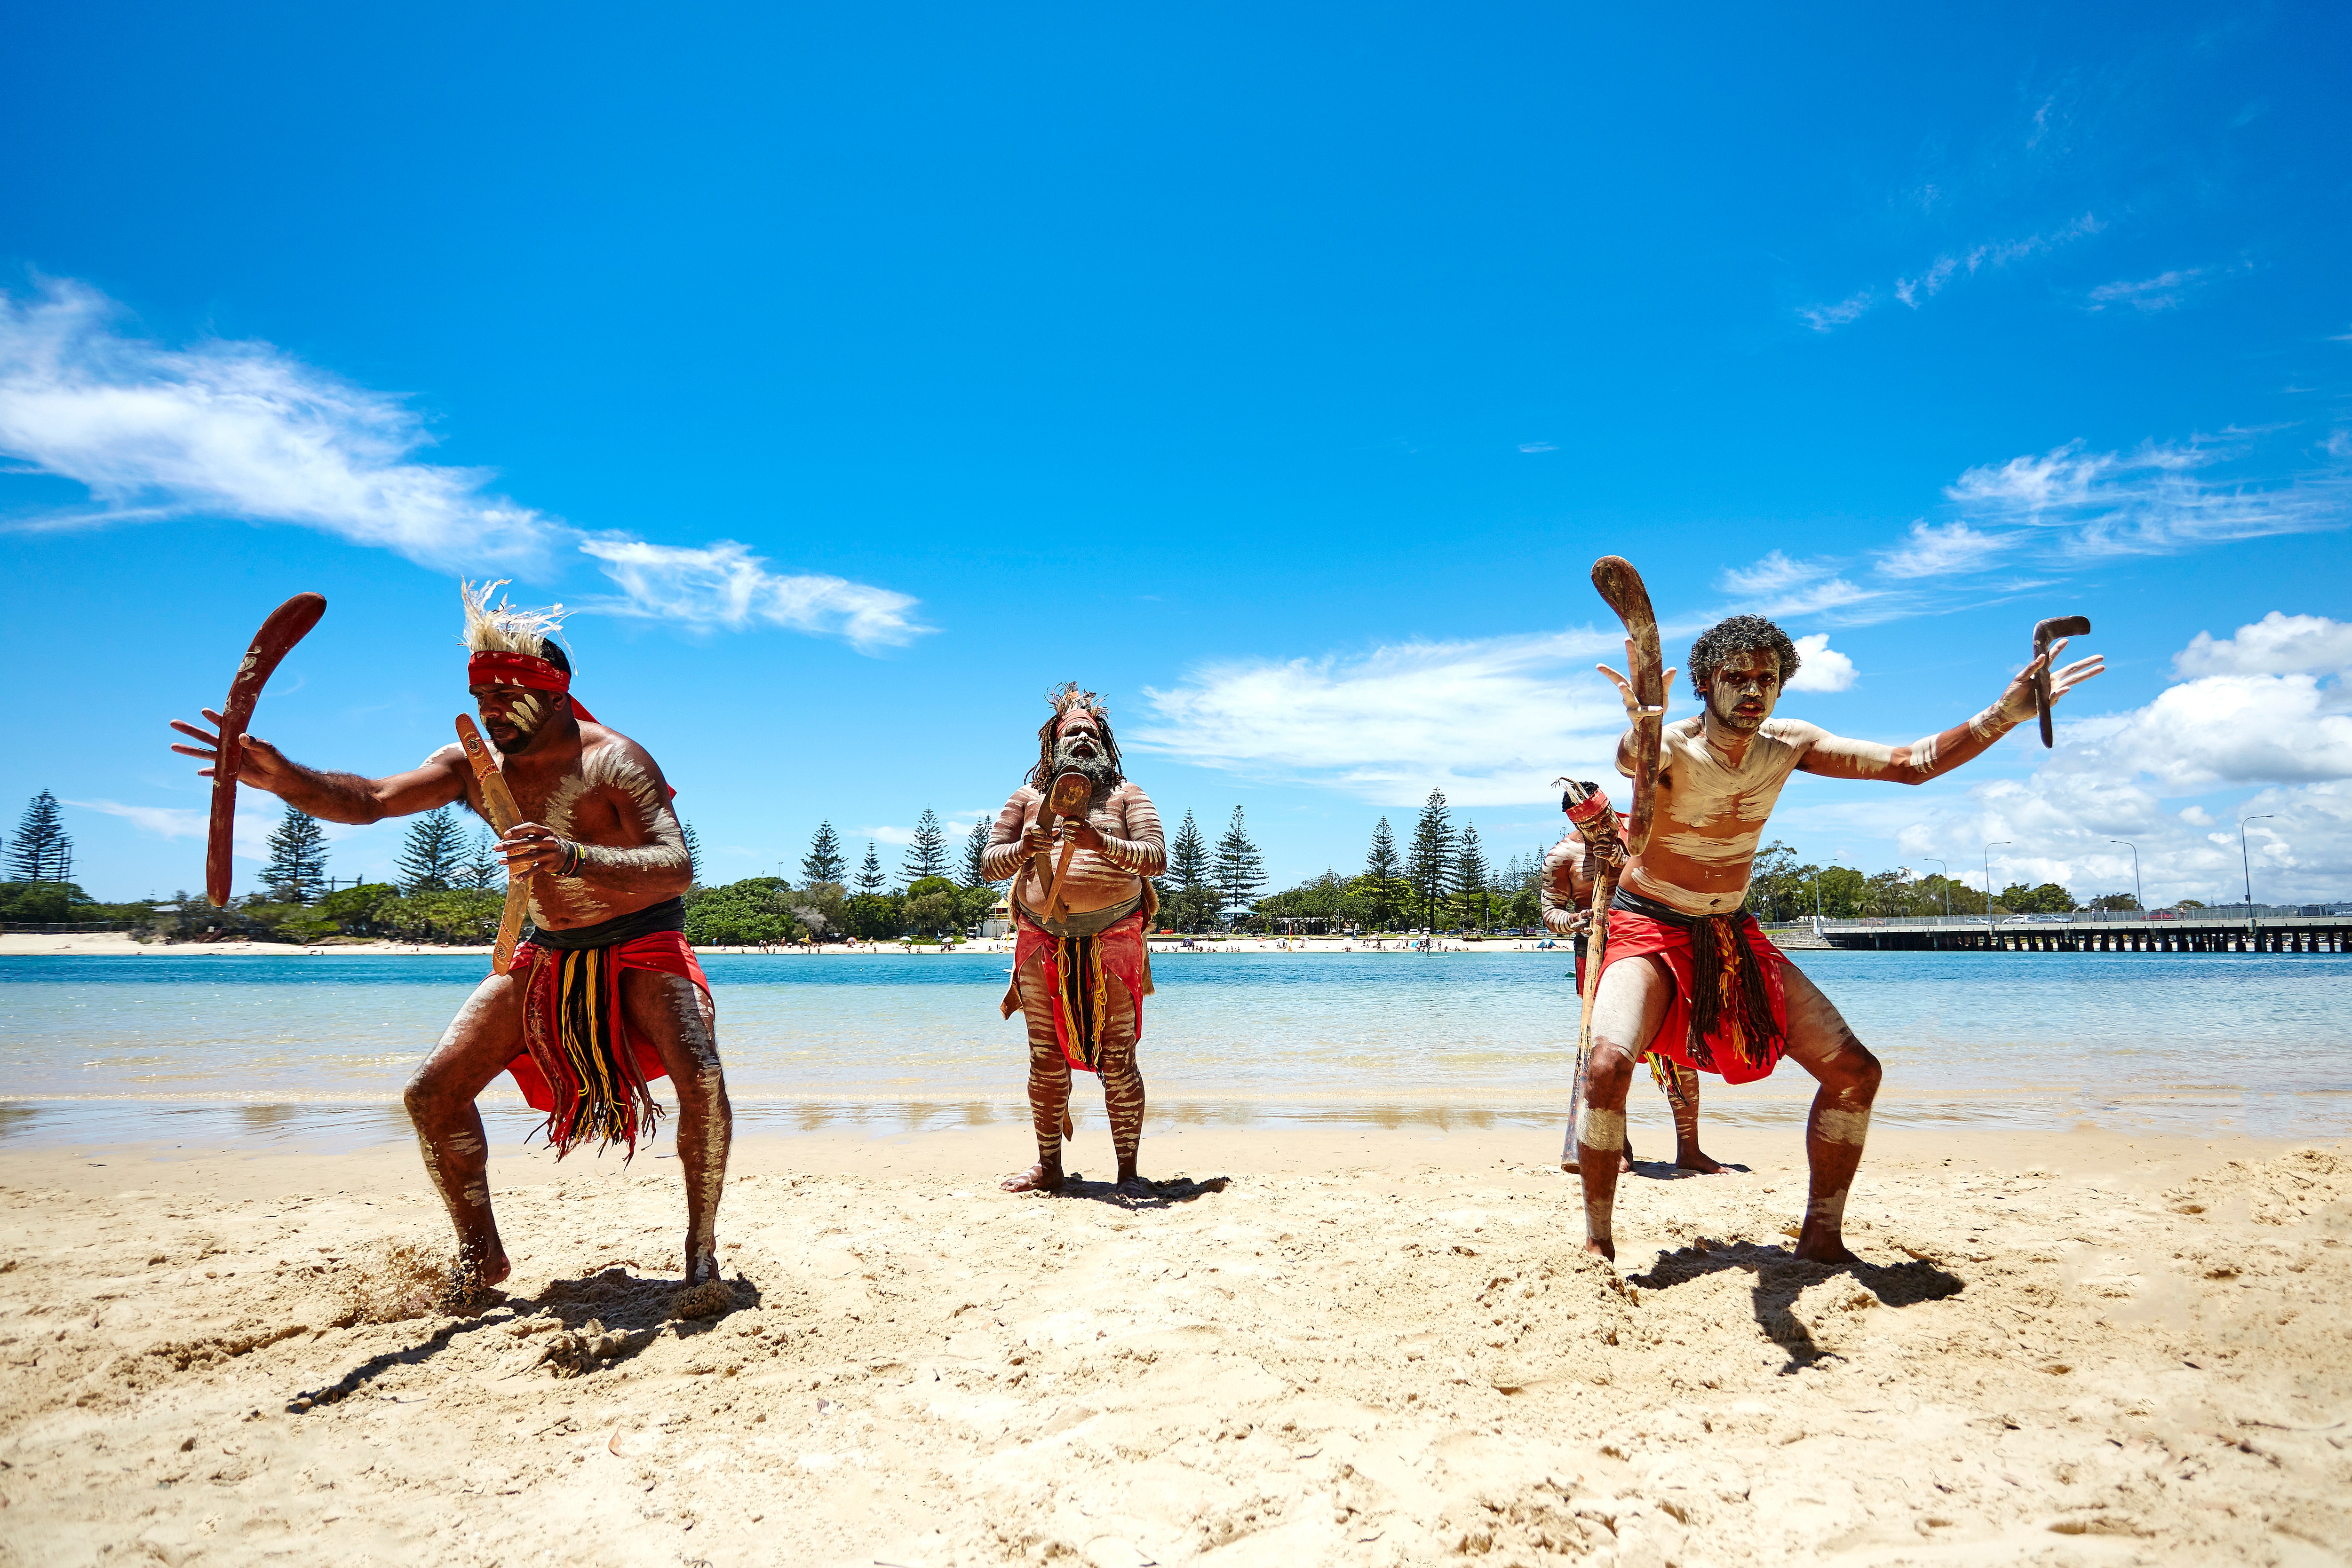 aboriginal culture in brisbane and gold coast - tourism australia